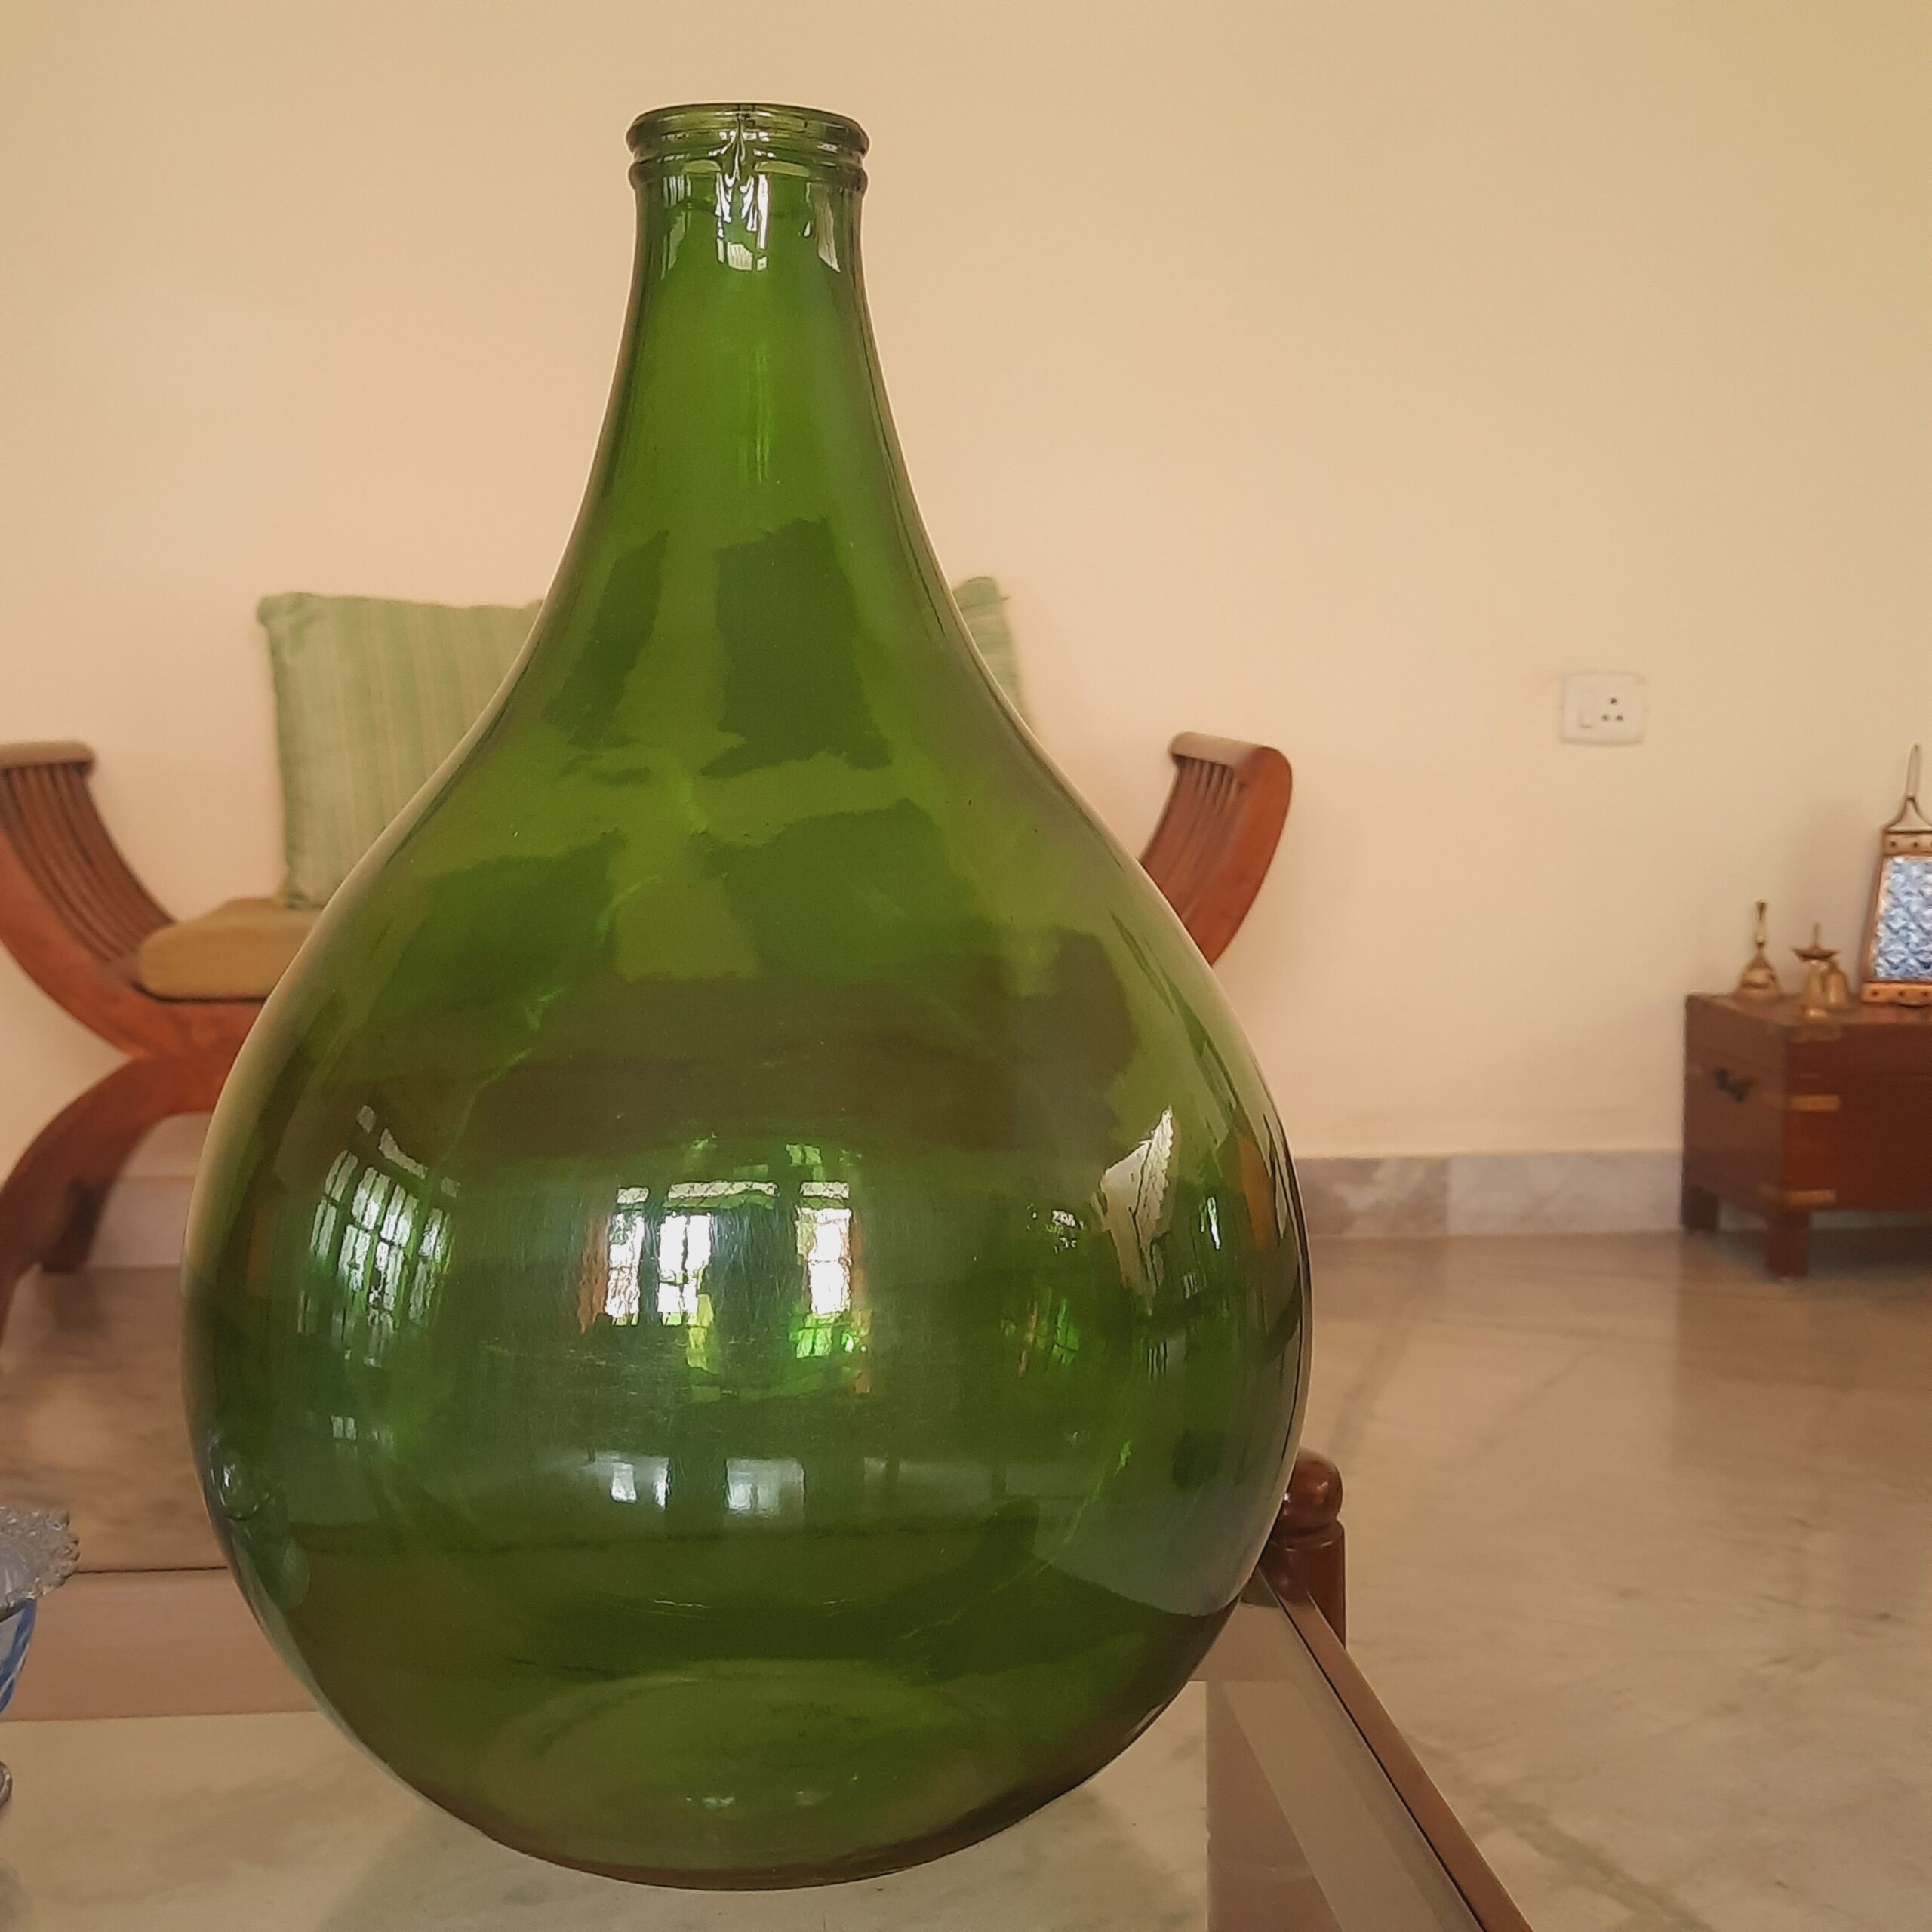 Demijohns in Indian Decor | Green Demijohn wine bottle at the living room